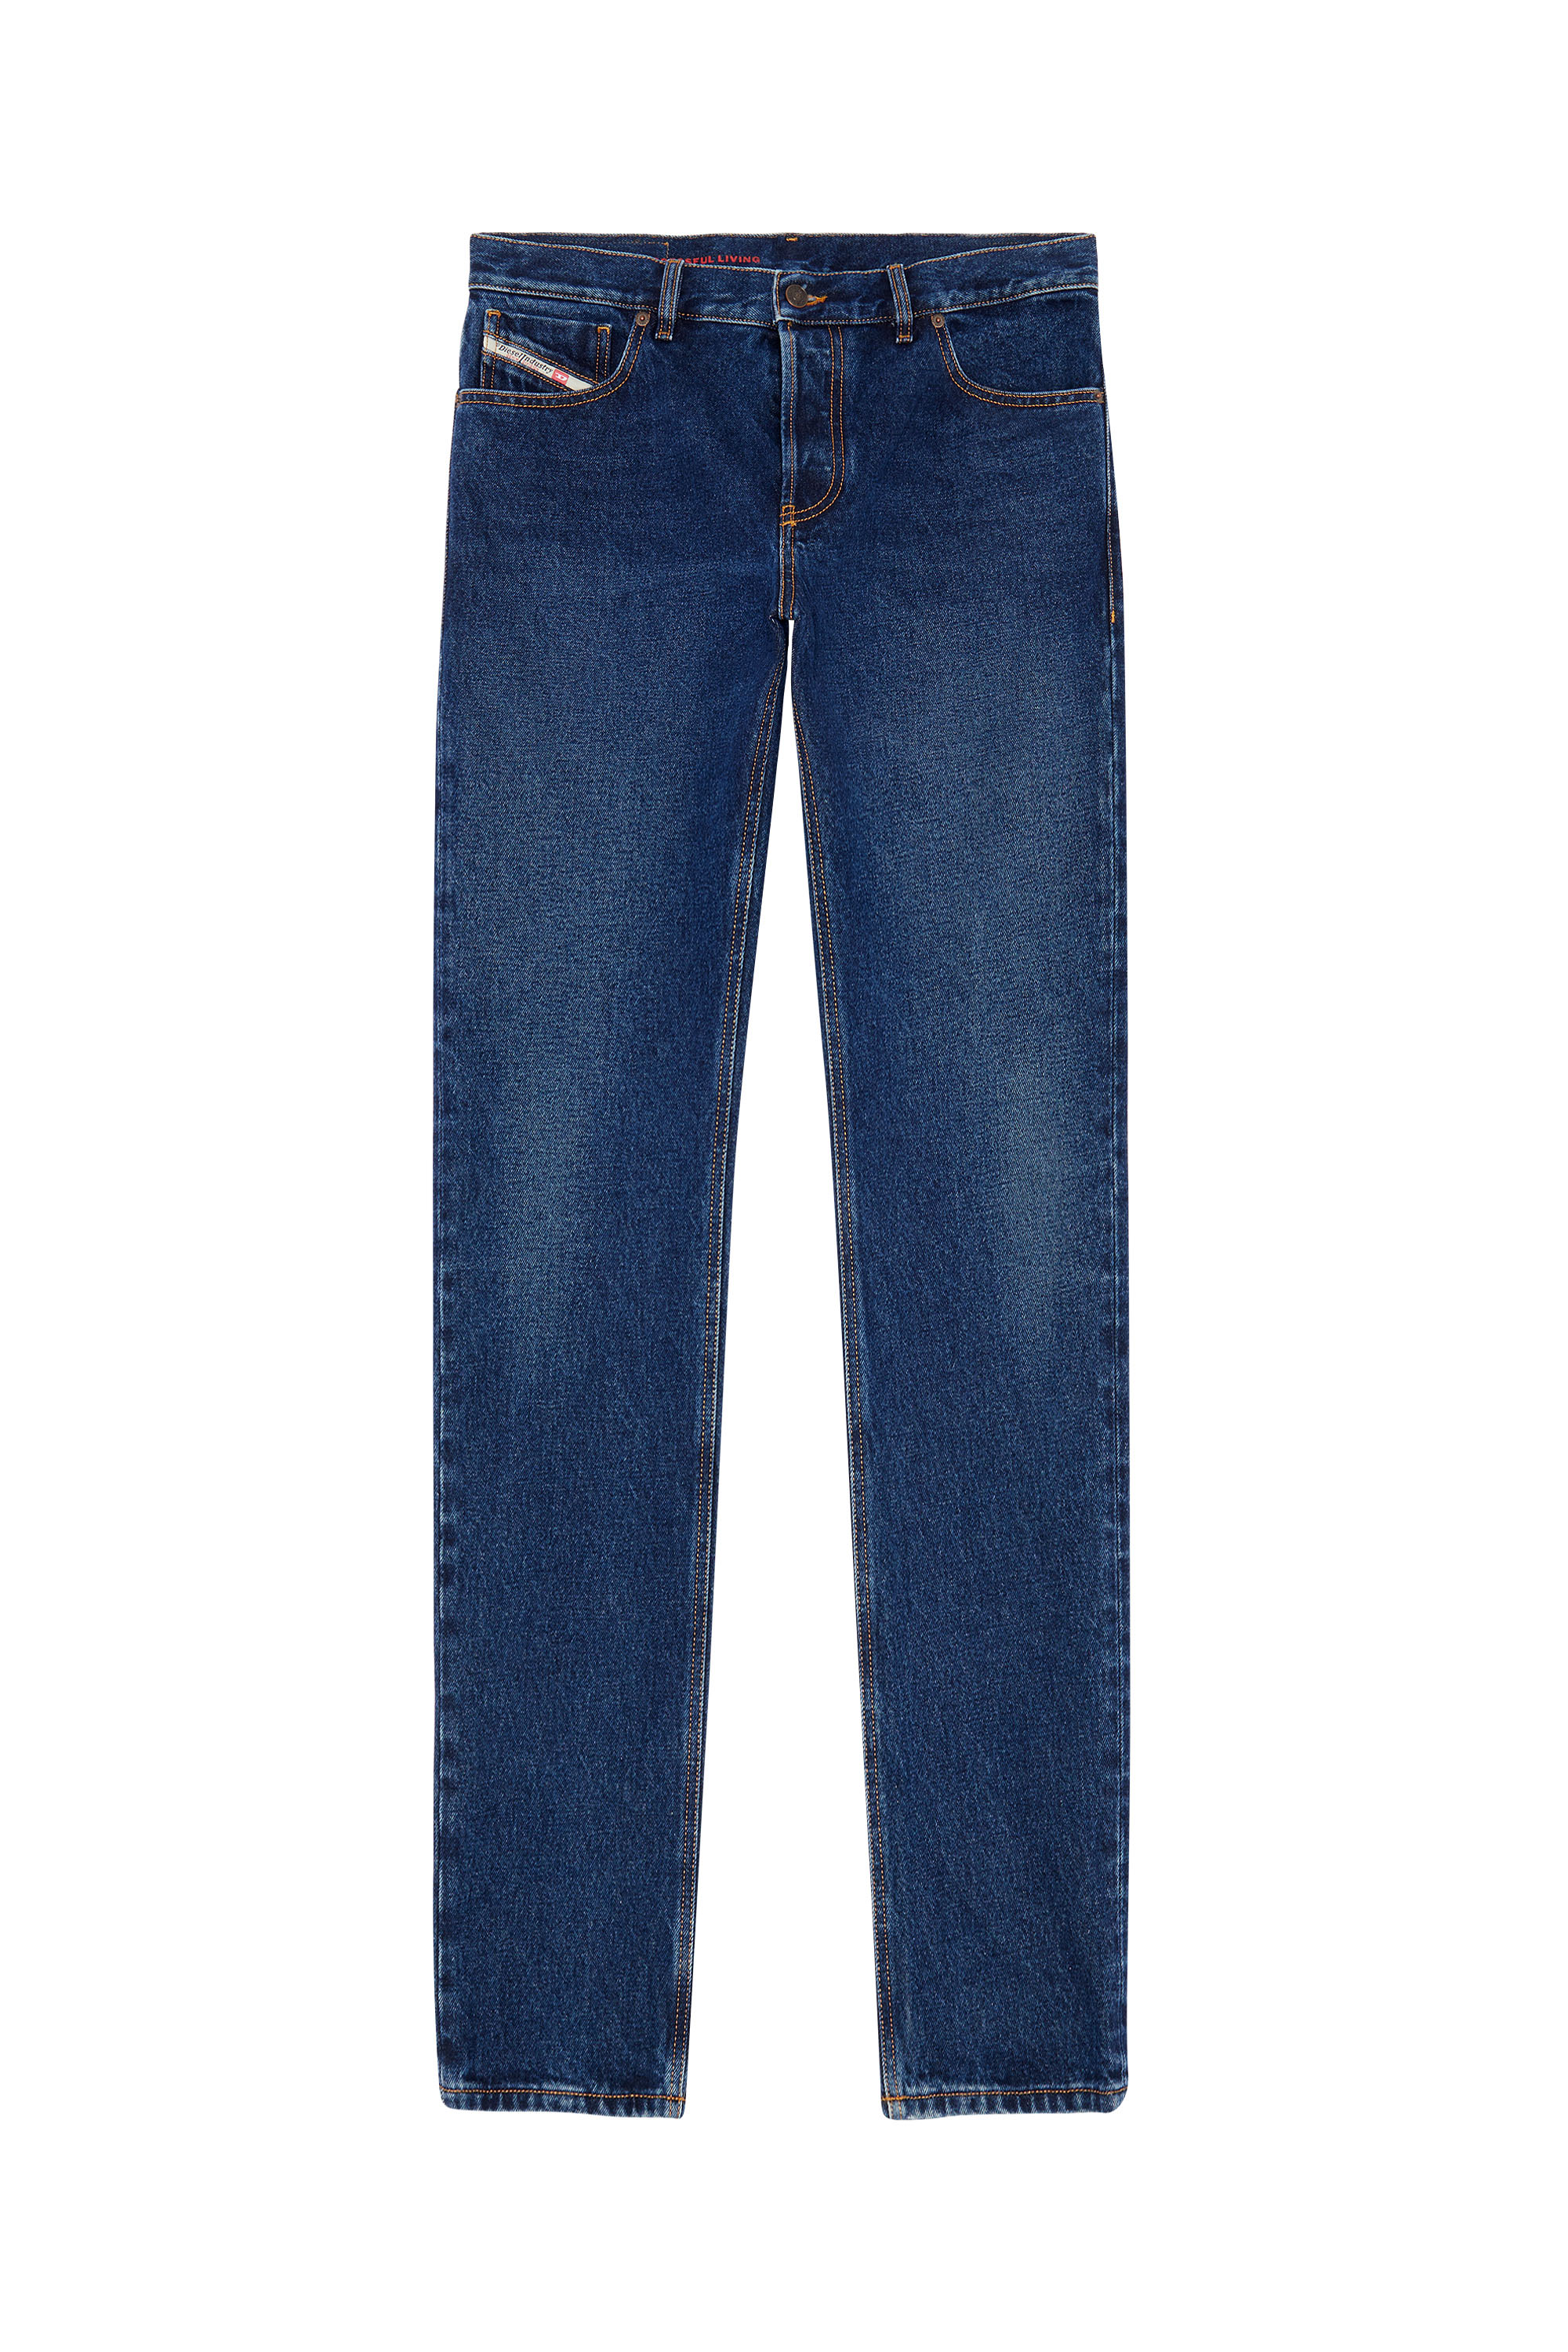 1995 007E6 Straight Jeans, Dunkelblau - Jeans